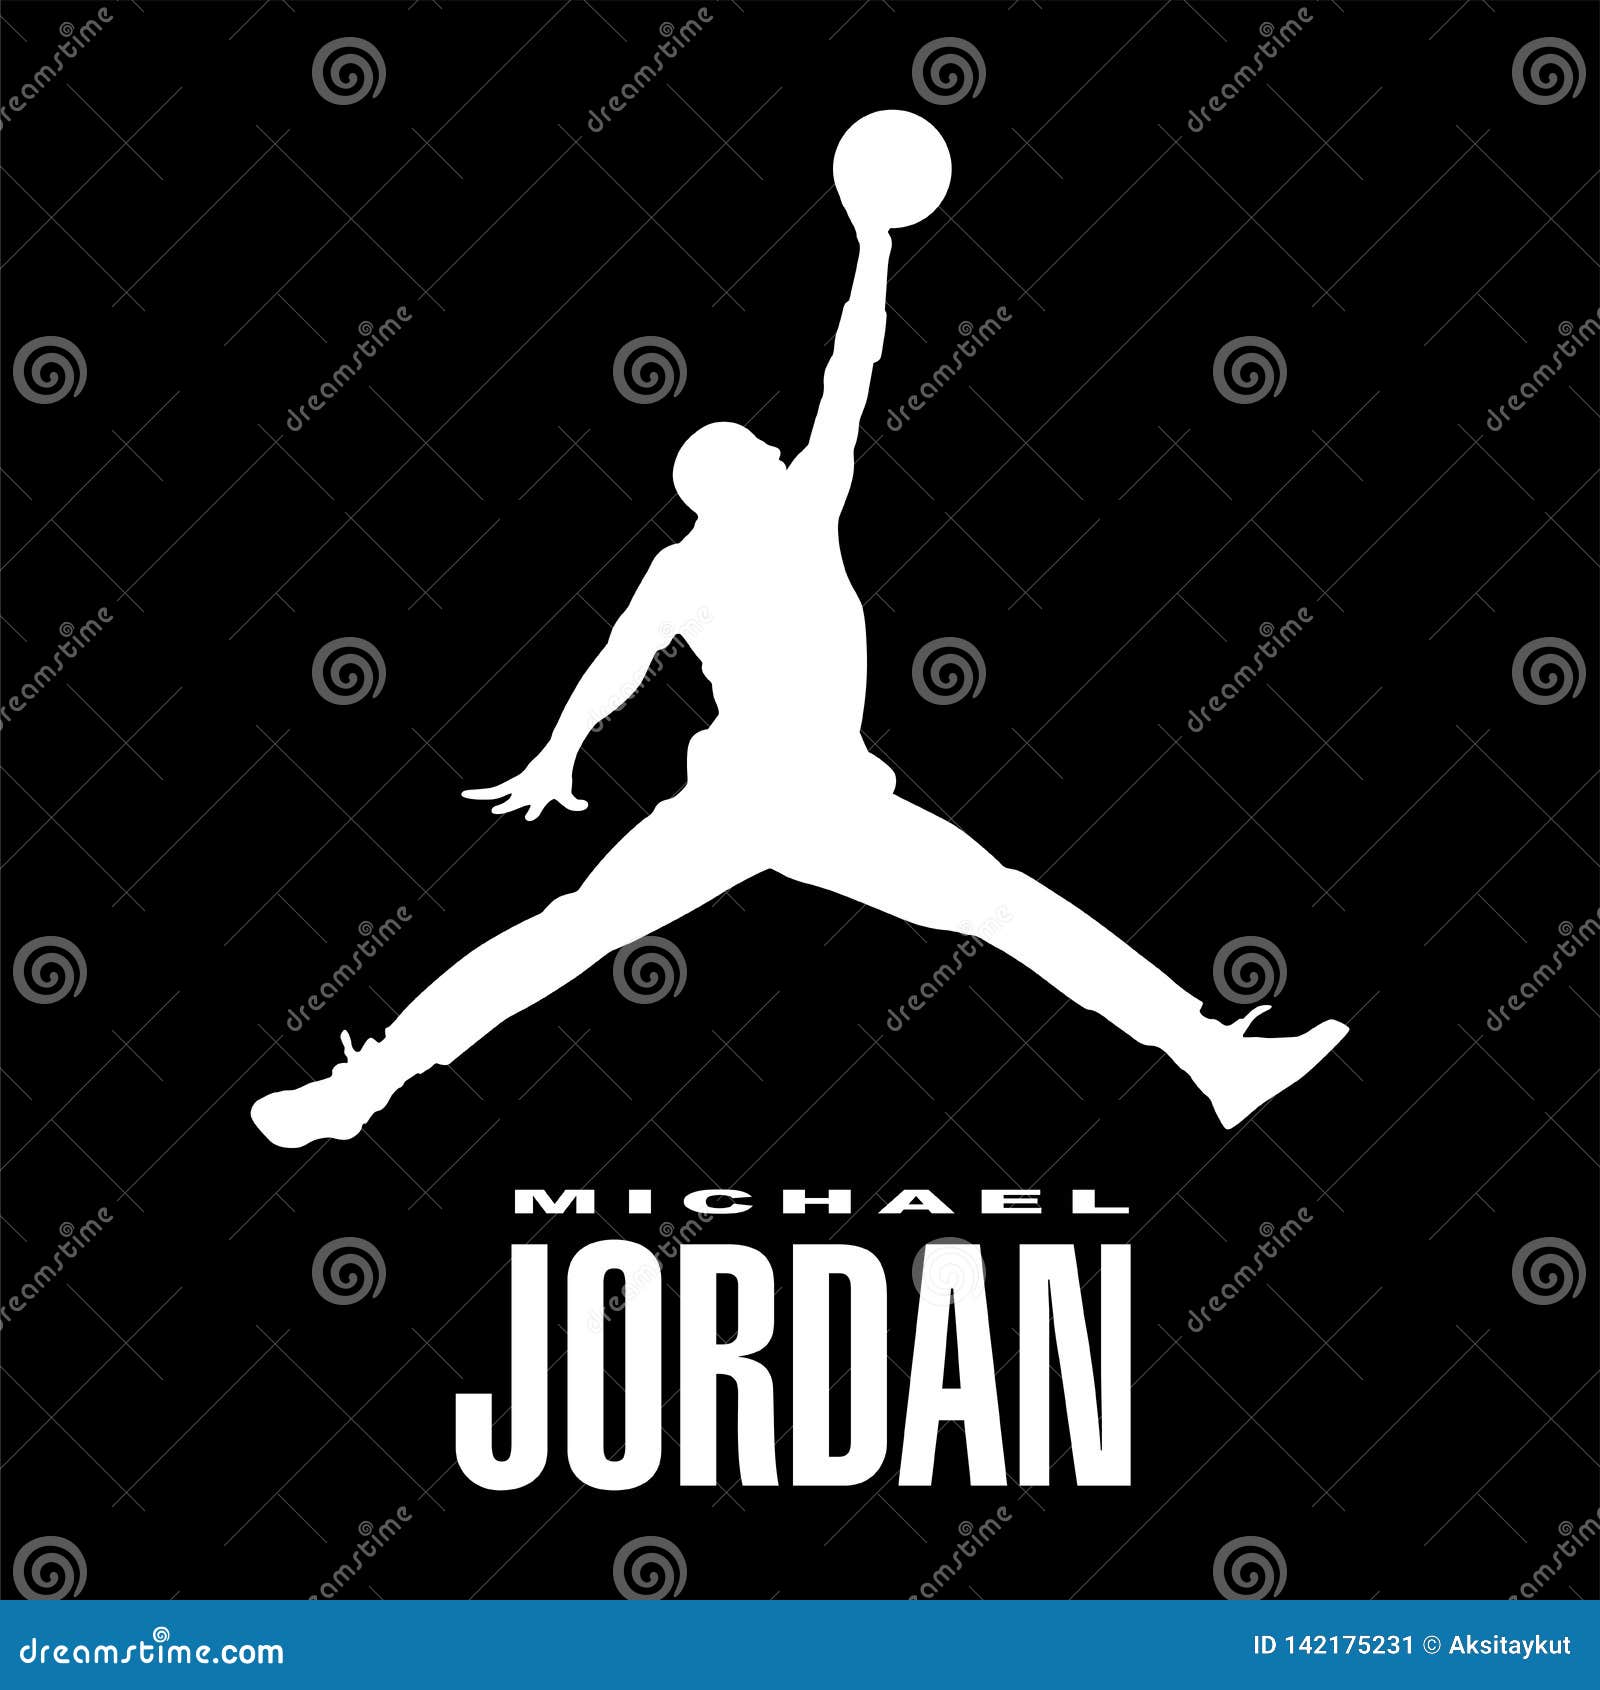 Michael Jordan logo icon editorial photo. Illustration of washington -  142175231